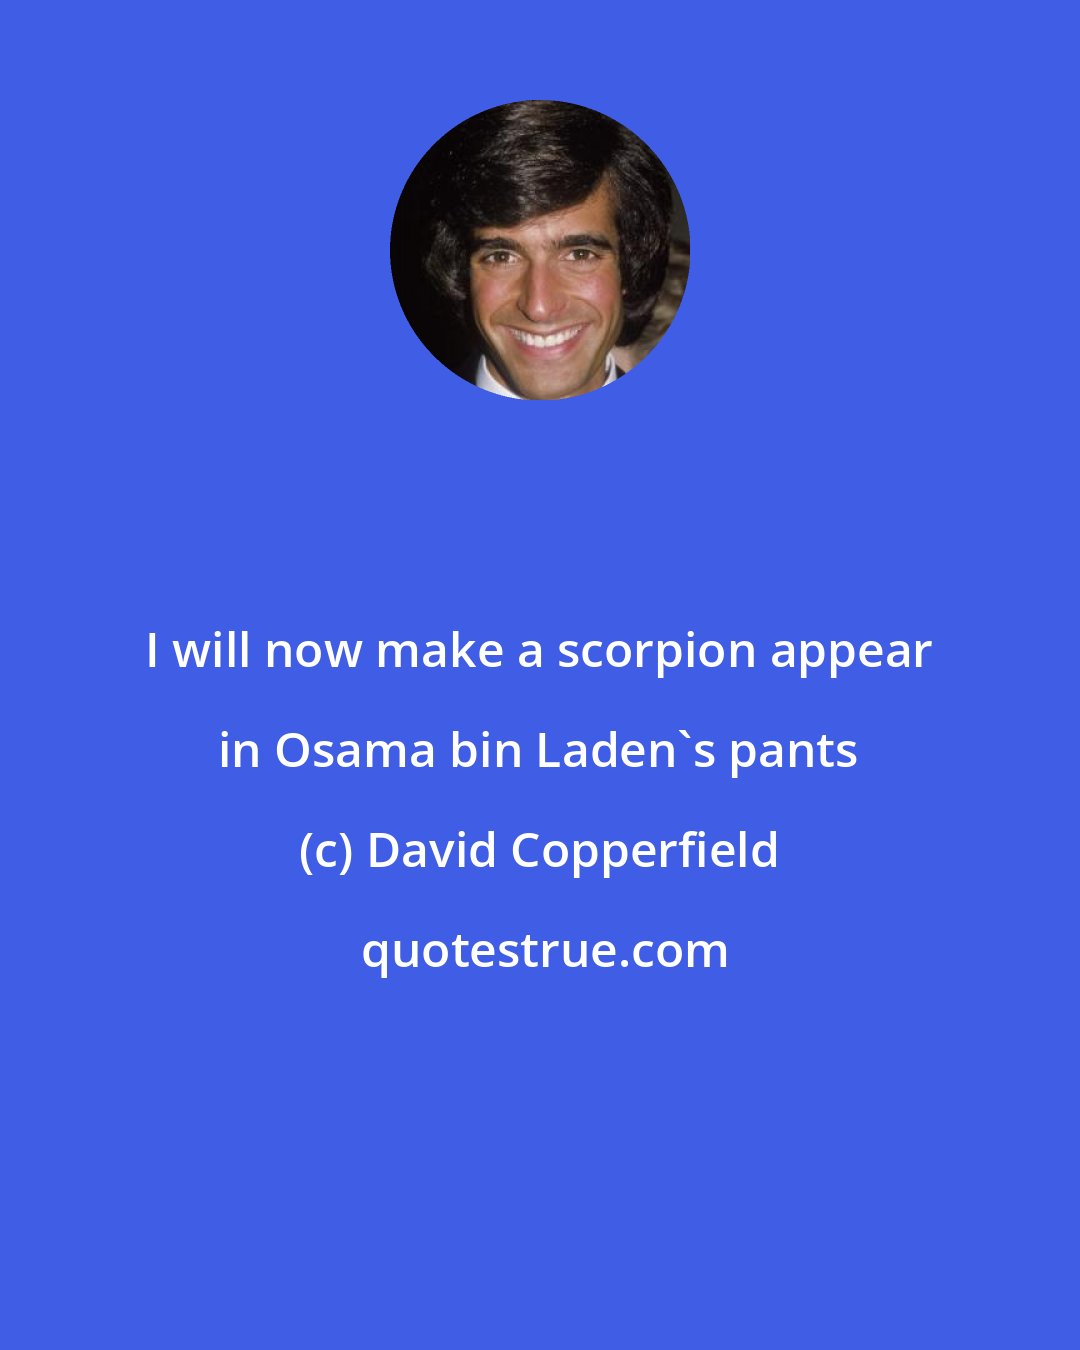 David Copperfield: I will now make a scorpion appear in Osama bin Laden's pants